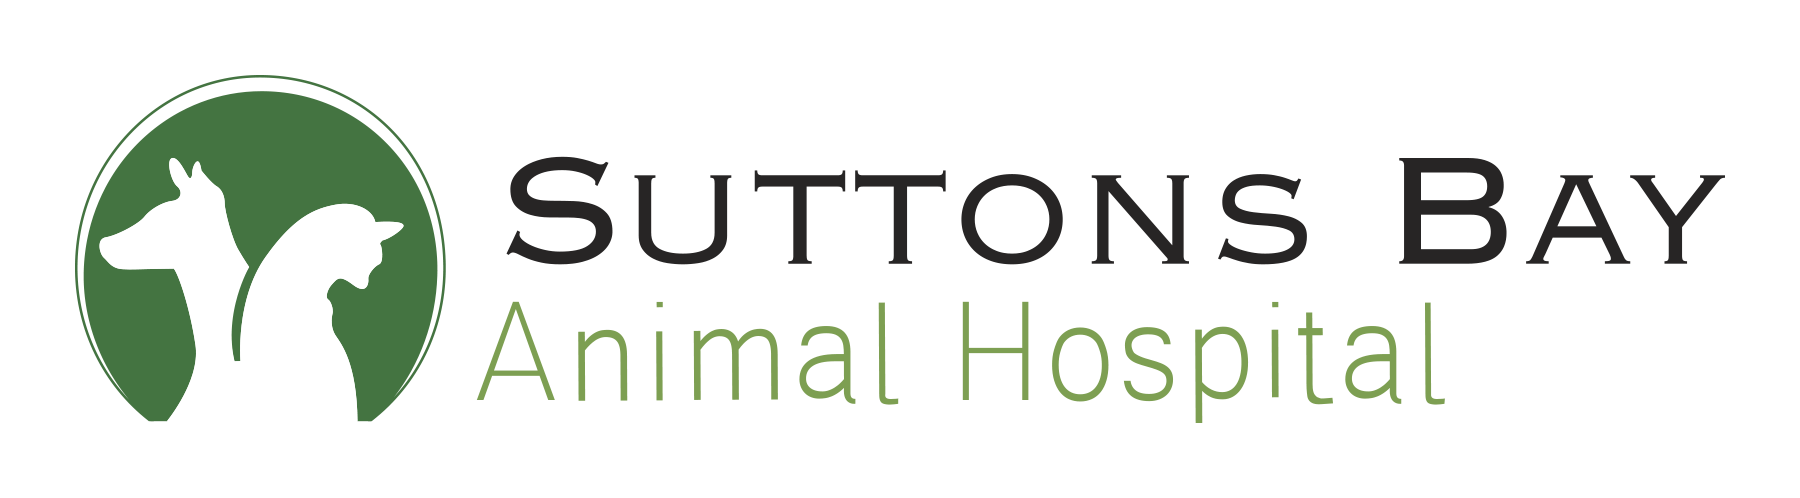 Suttons Bay Animal Hospital